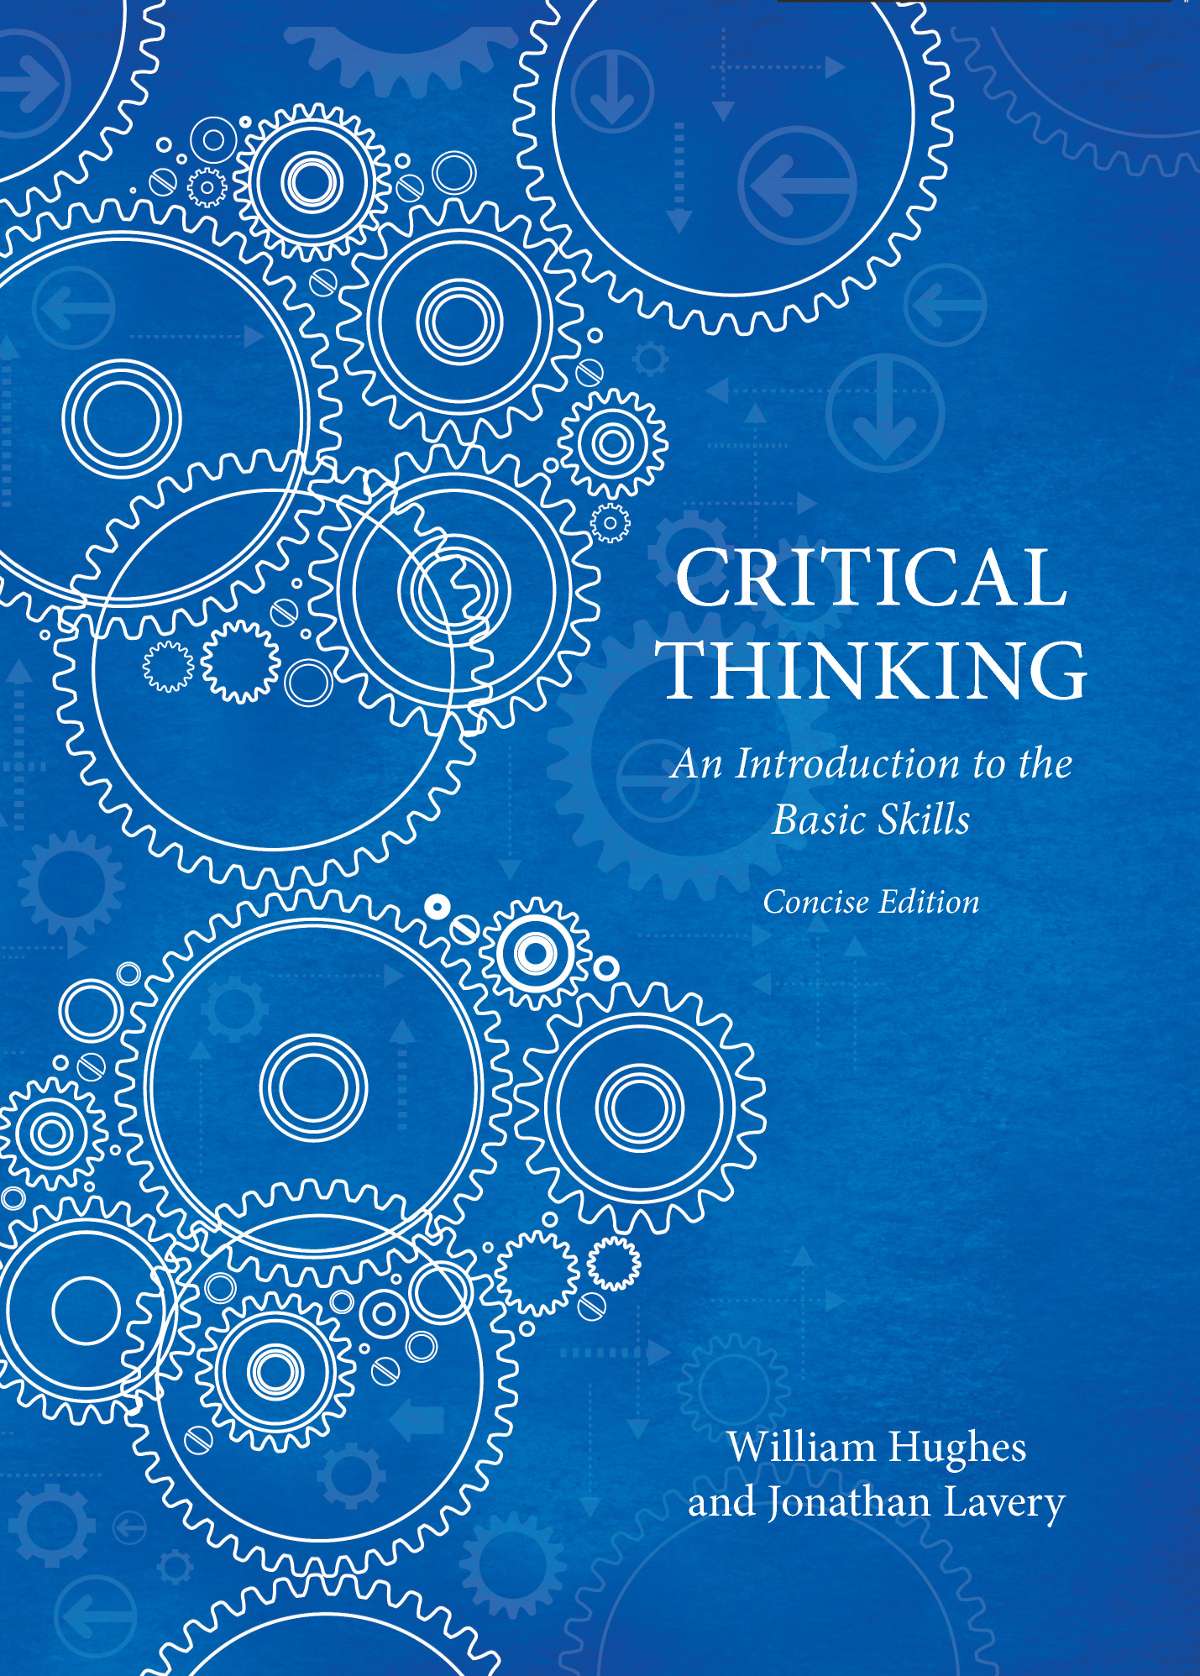 book on critical thinking skills